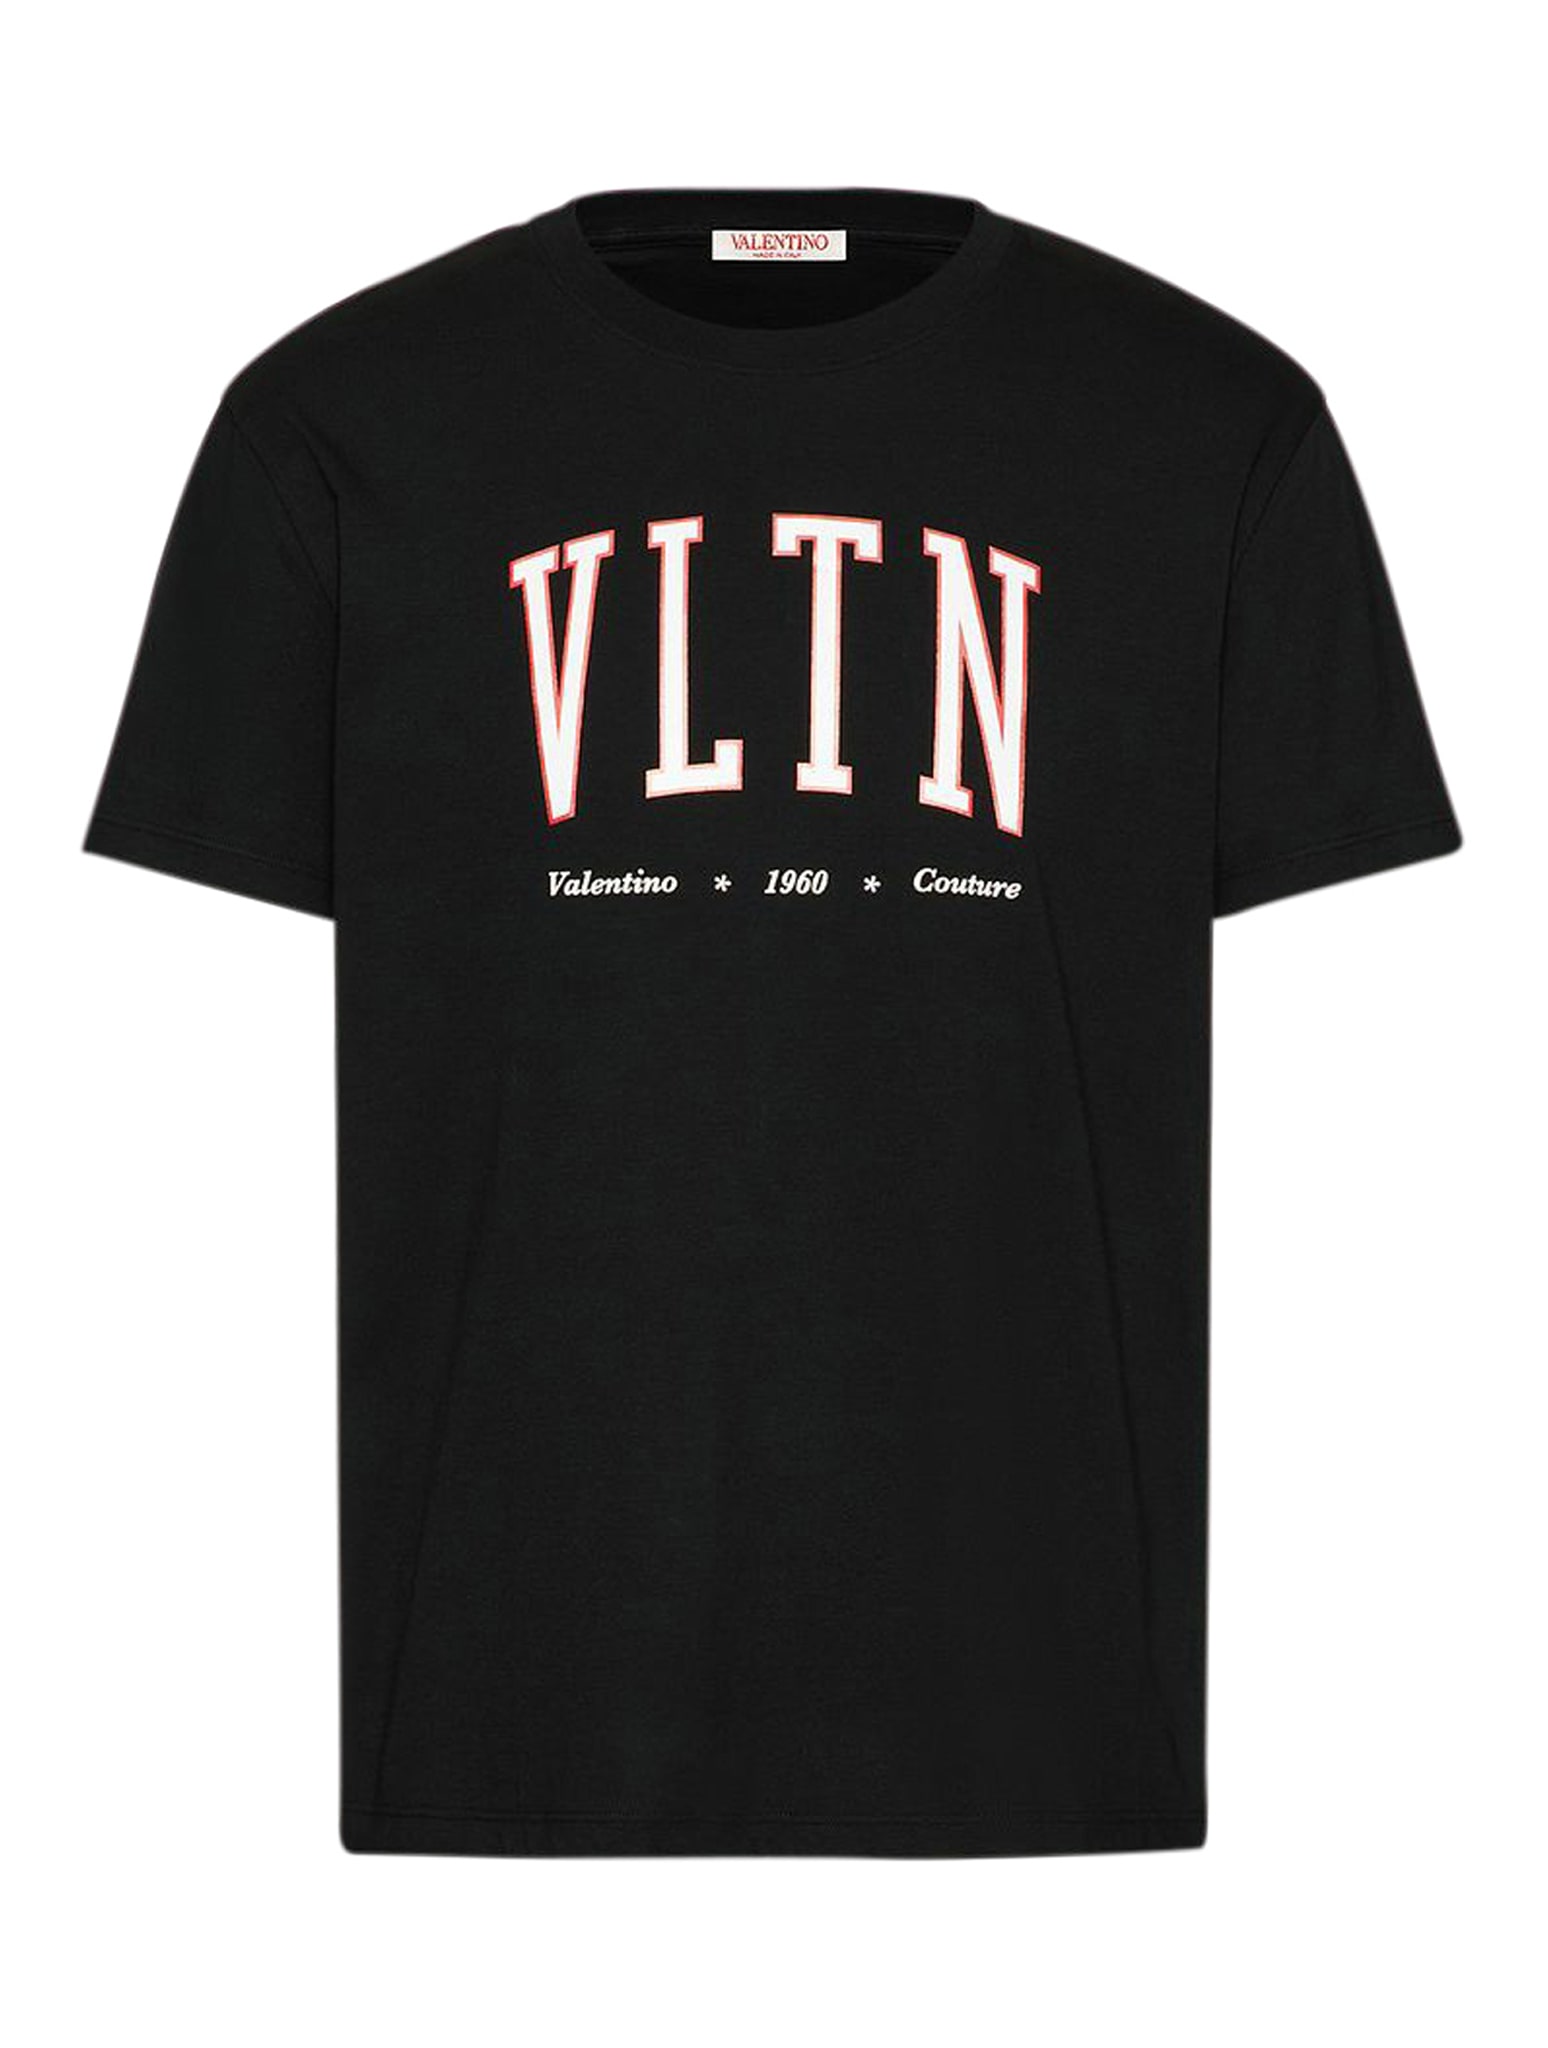 Valentino T-shirt Jersey, Reg, print Vltn